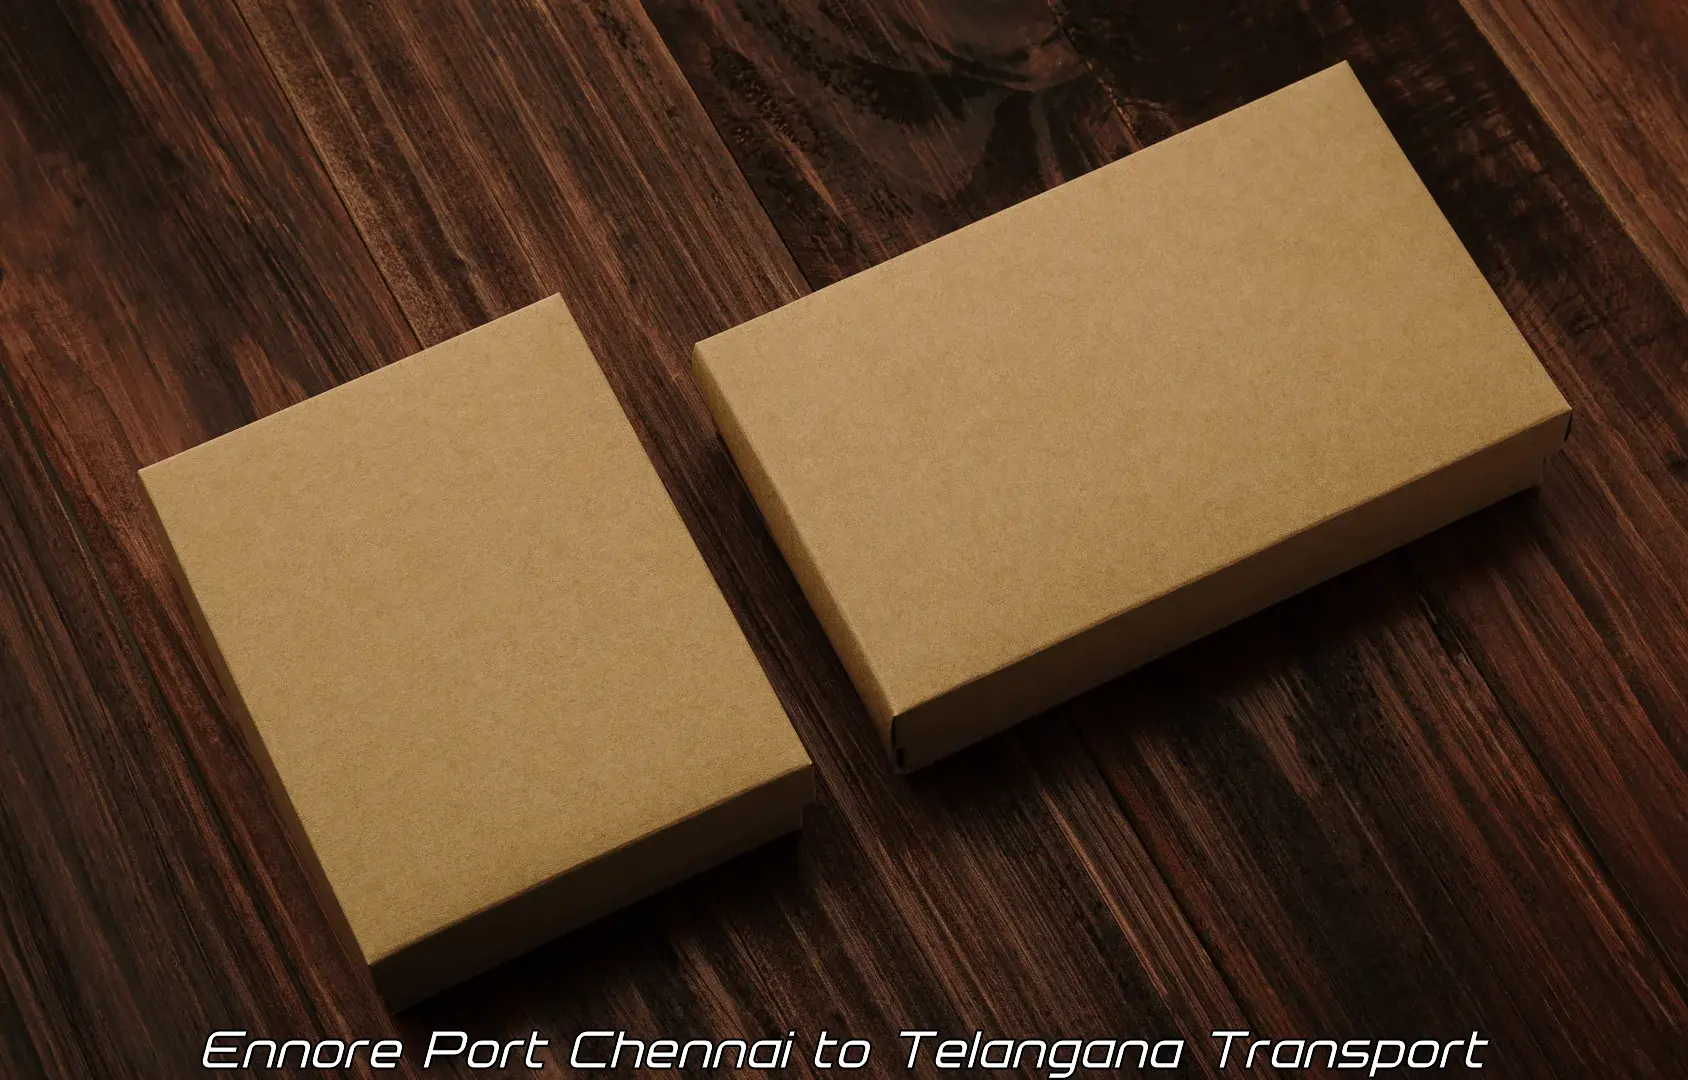 Two wheeler parcel service Ennore Port Chennai to Mudigonda